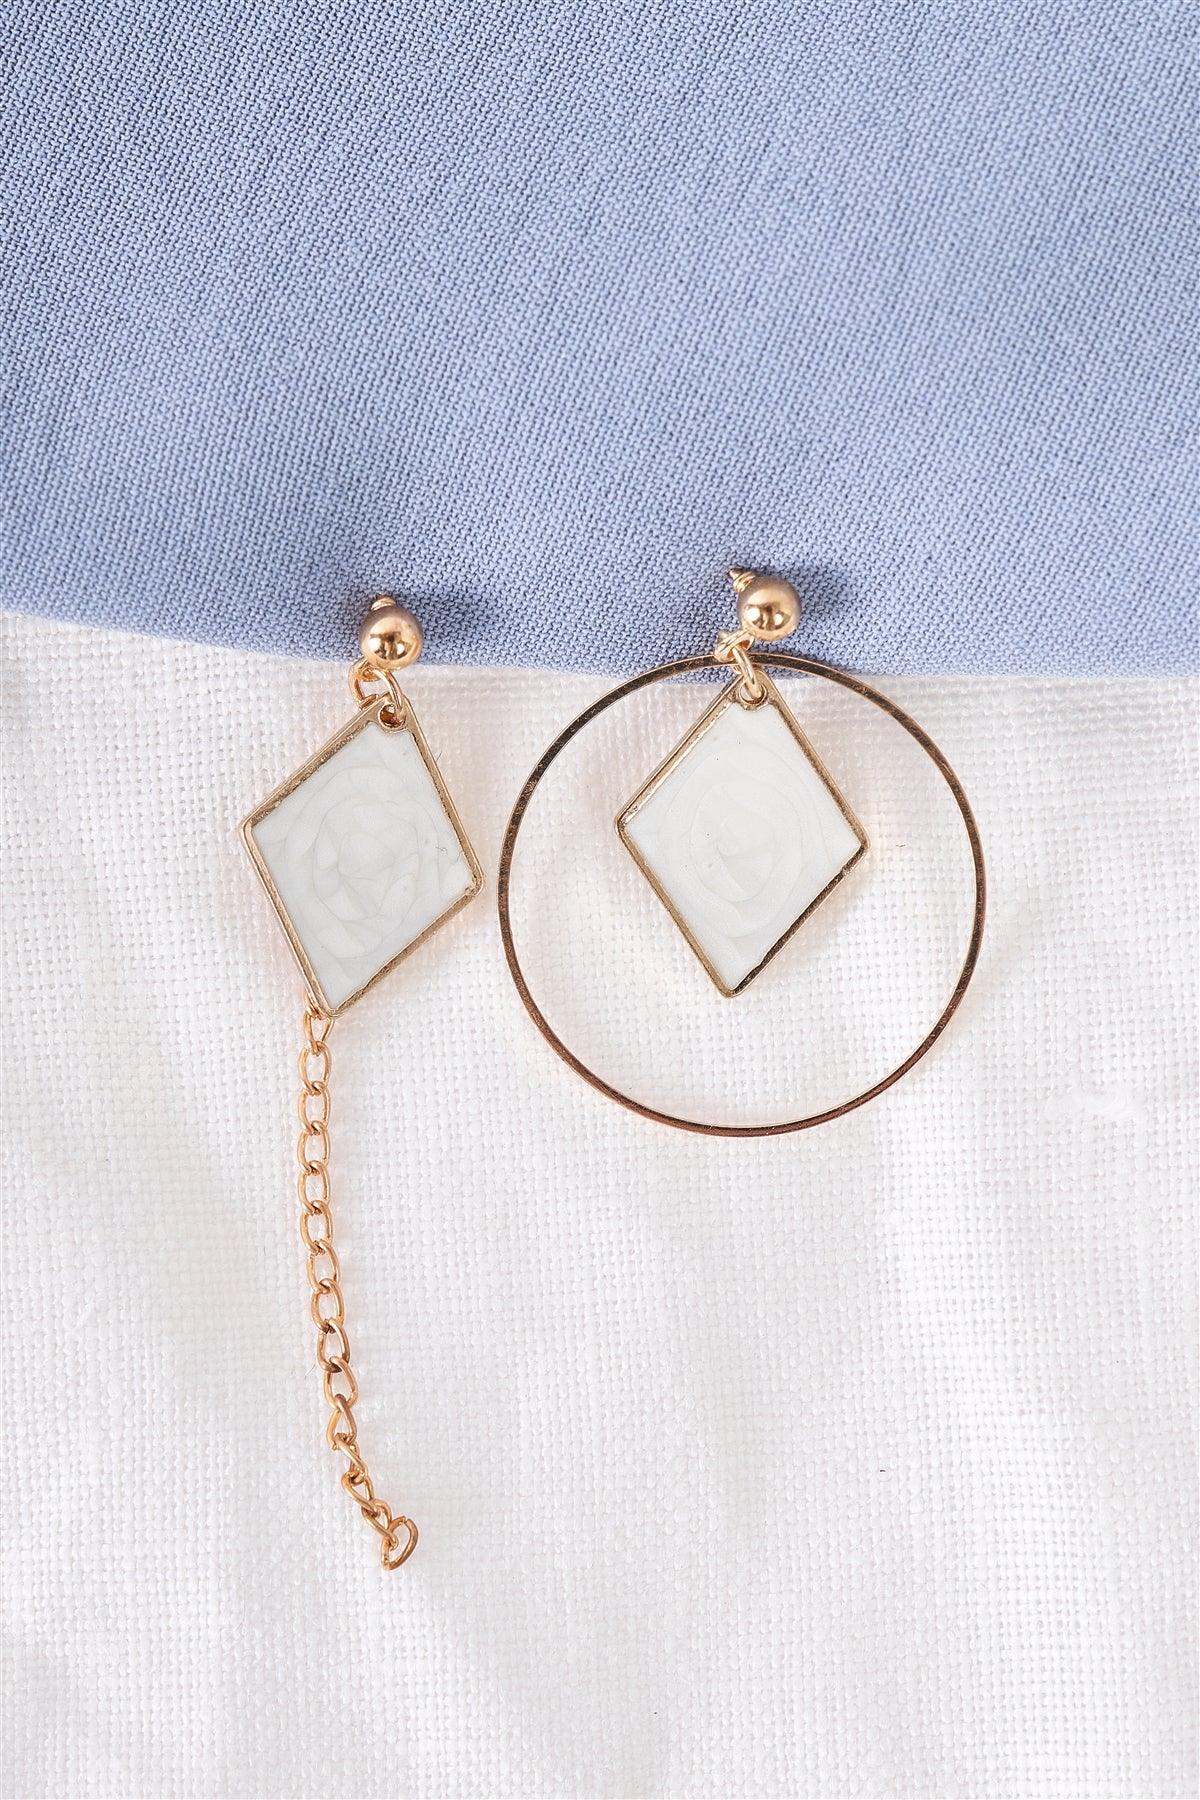 Gold & White Rhombus Asymmetrical Earrings / 3 Pairs